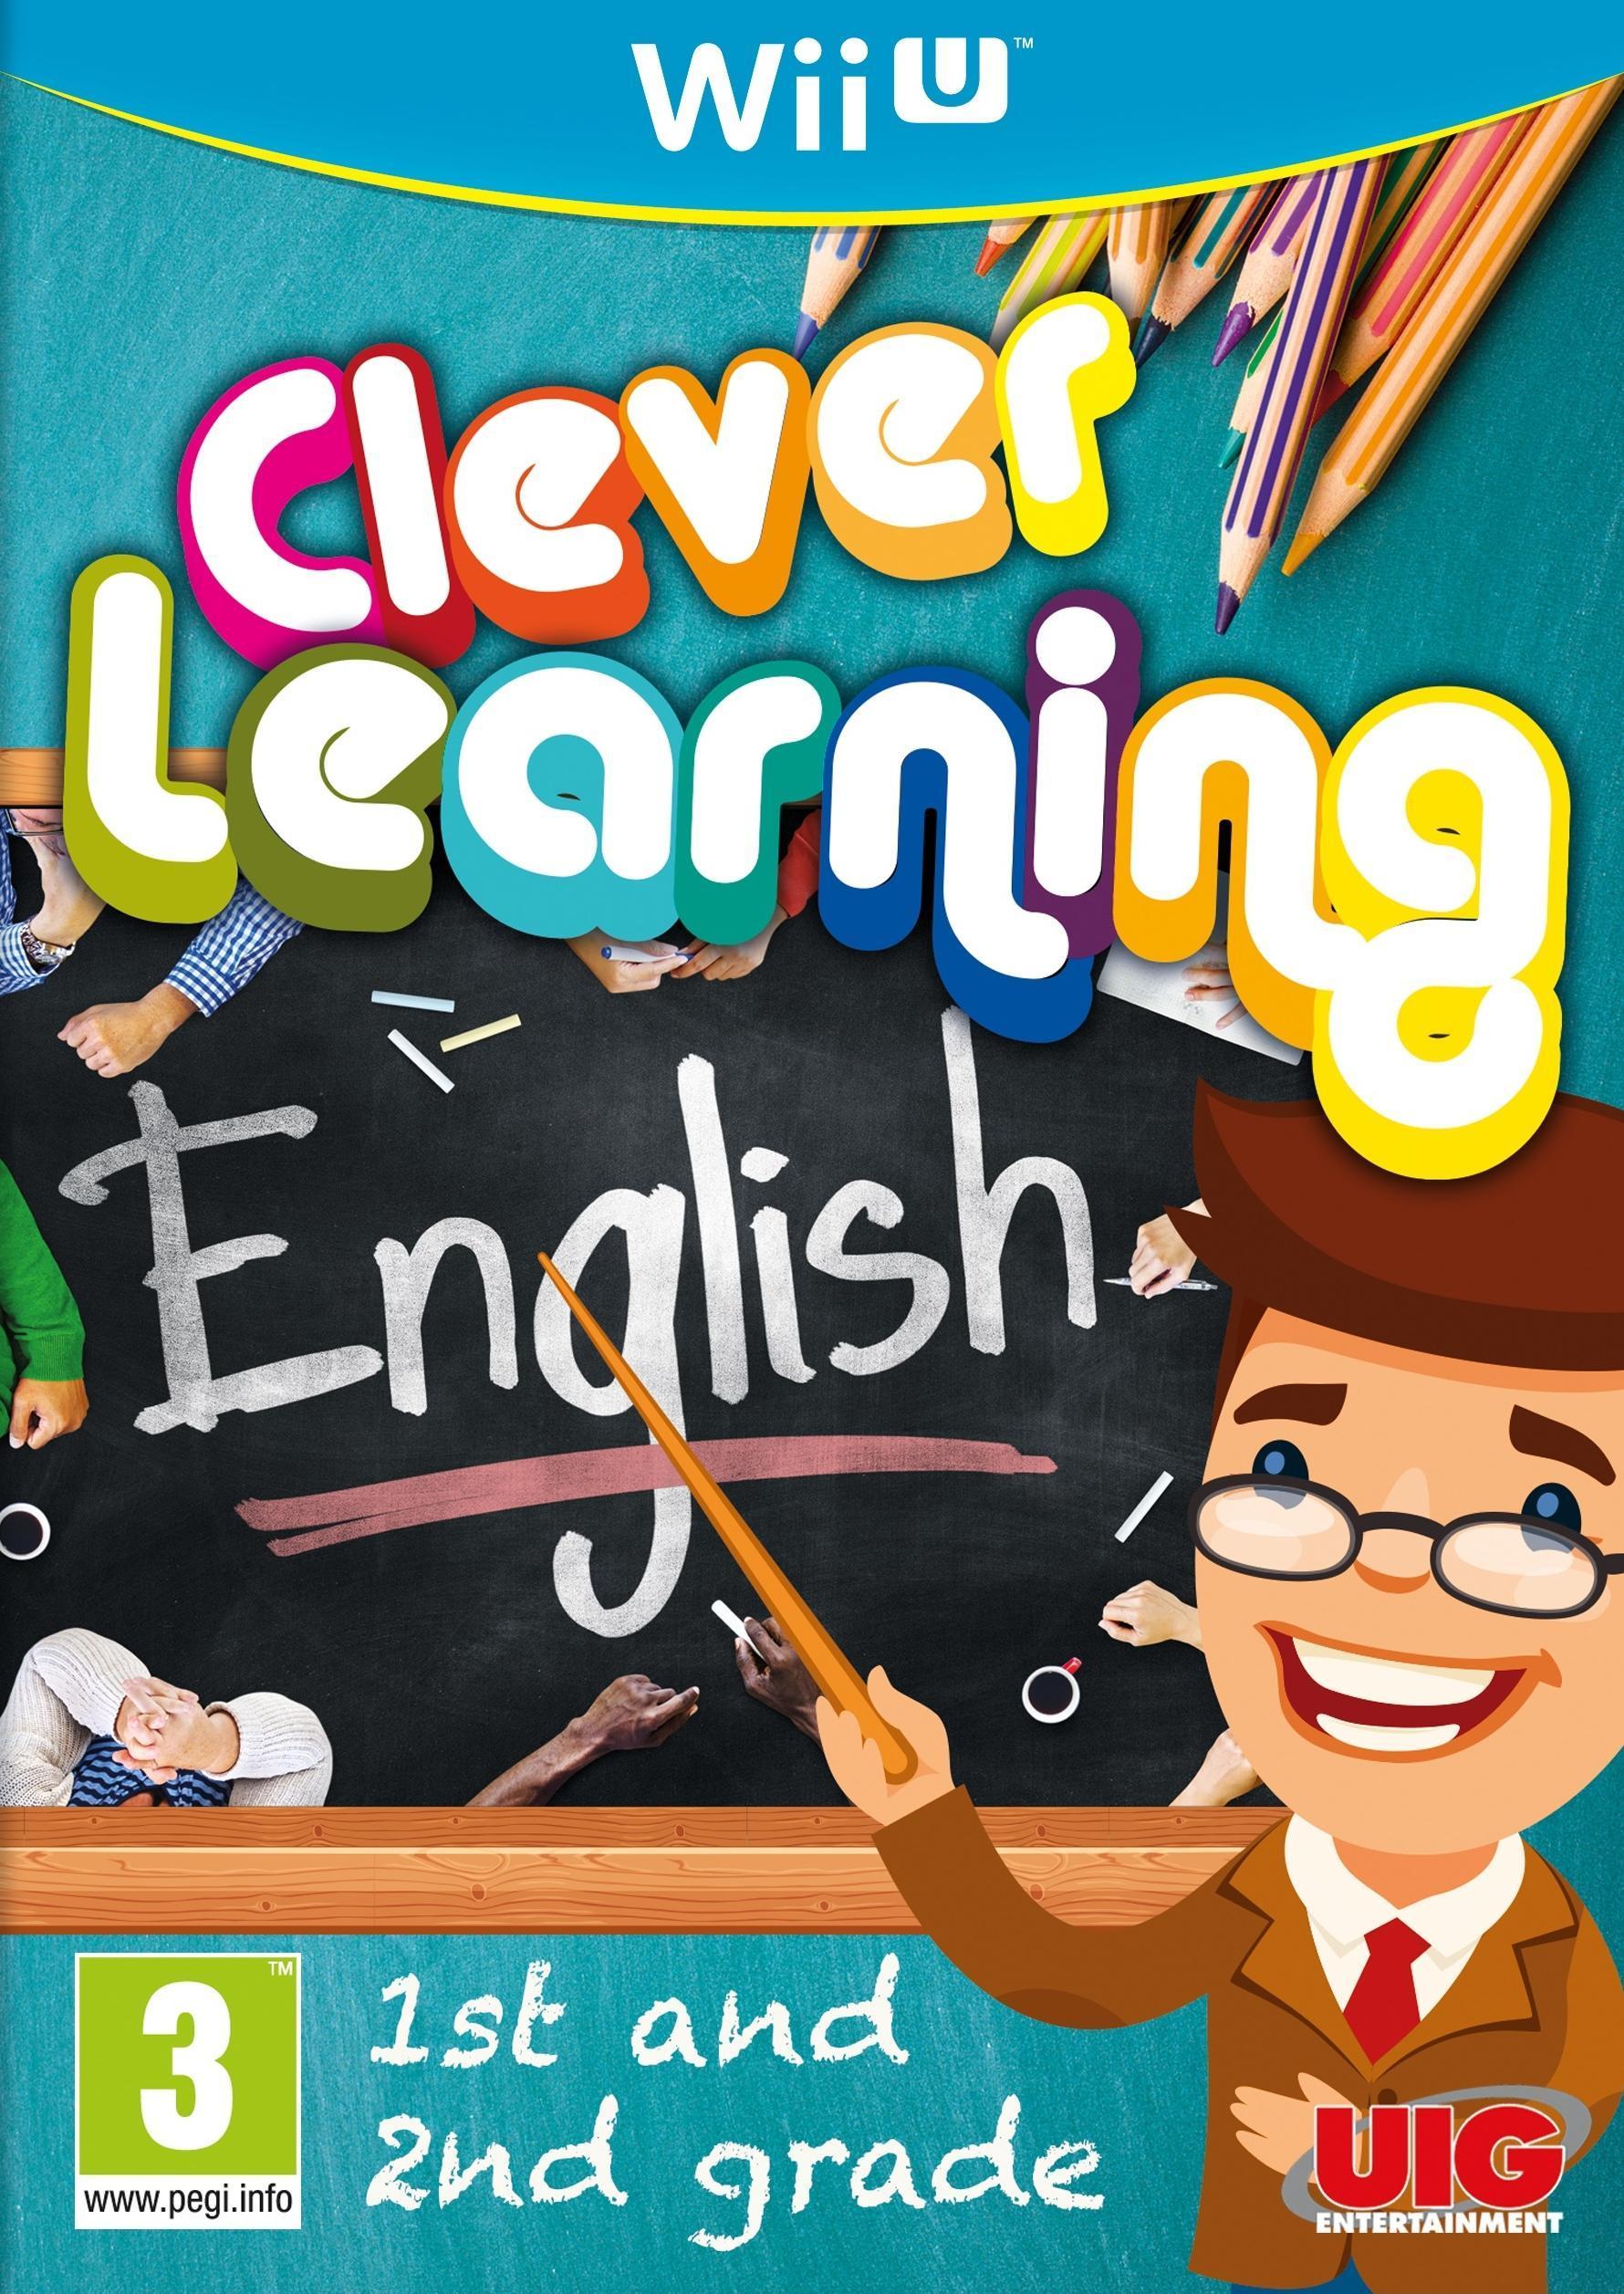 Clever Learning - English 1 + 2 (Wiiu), UIG Entertainment